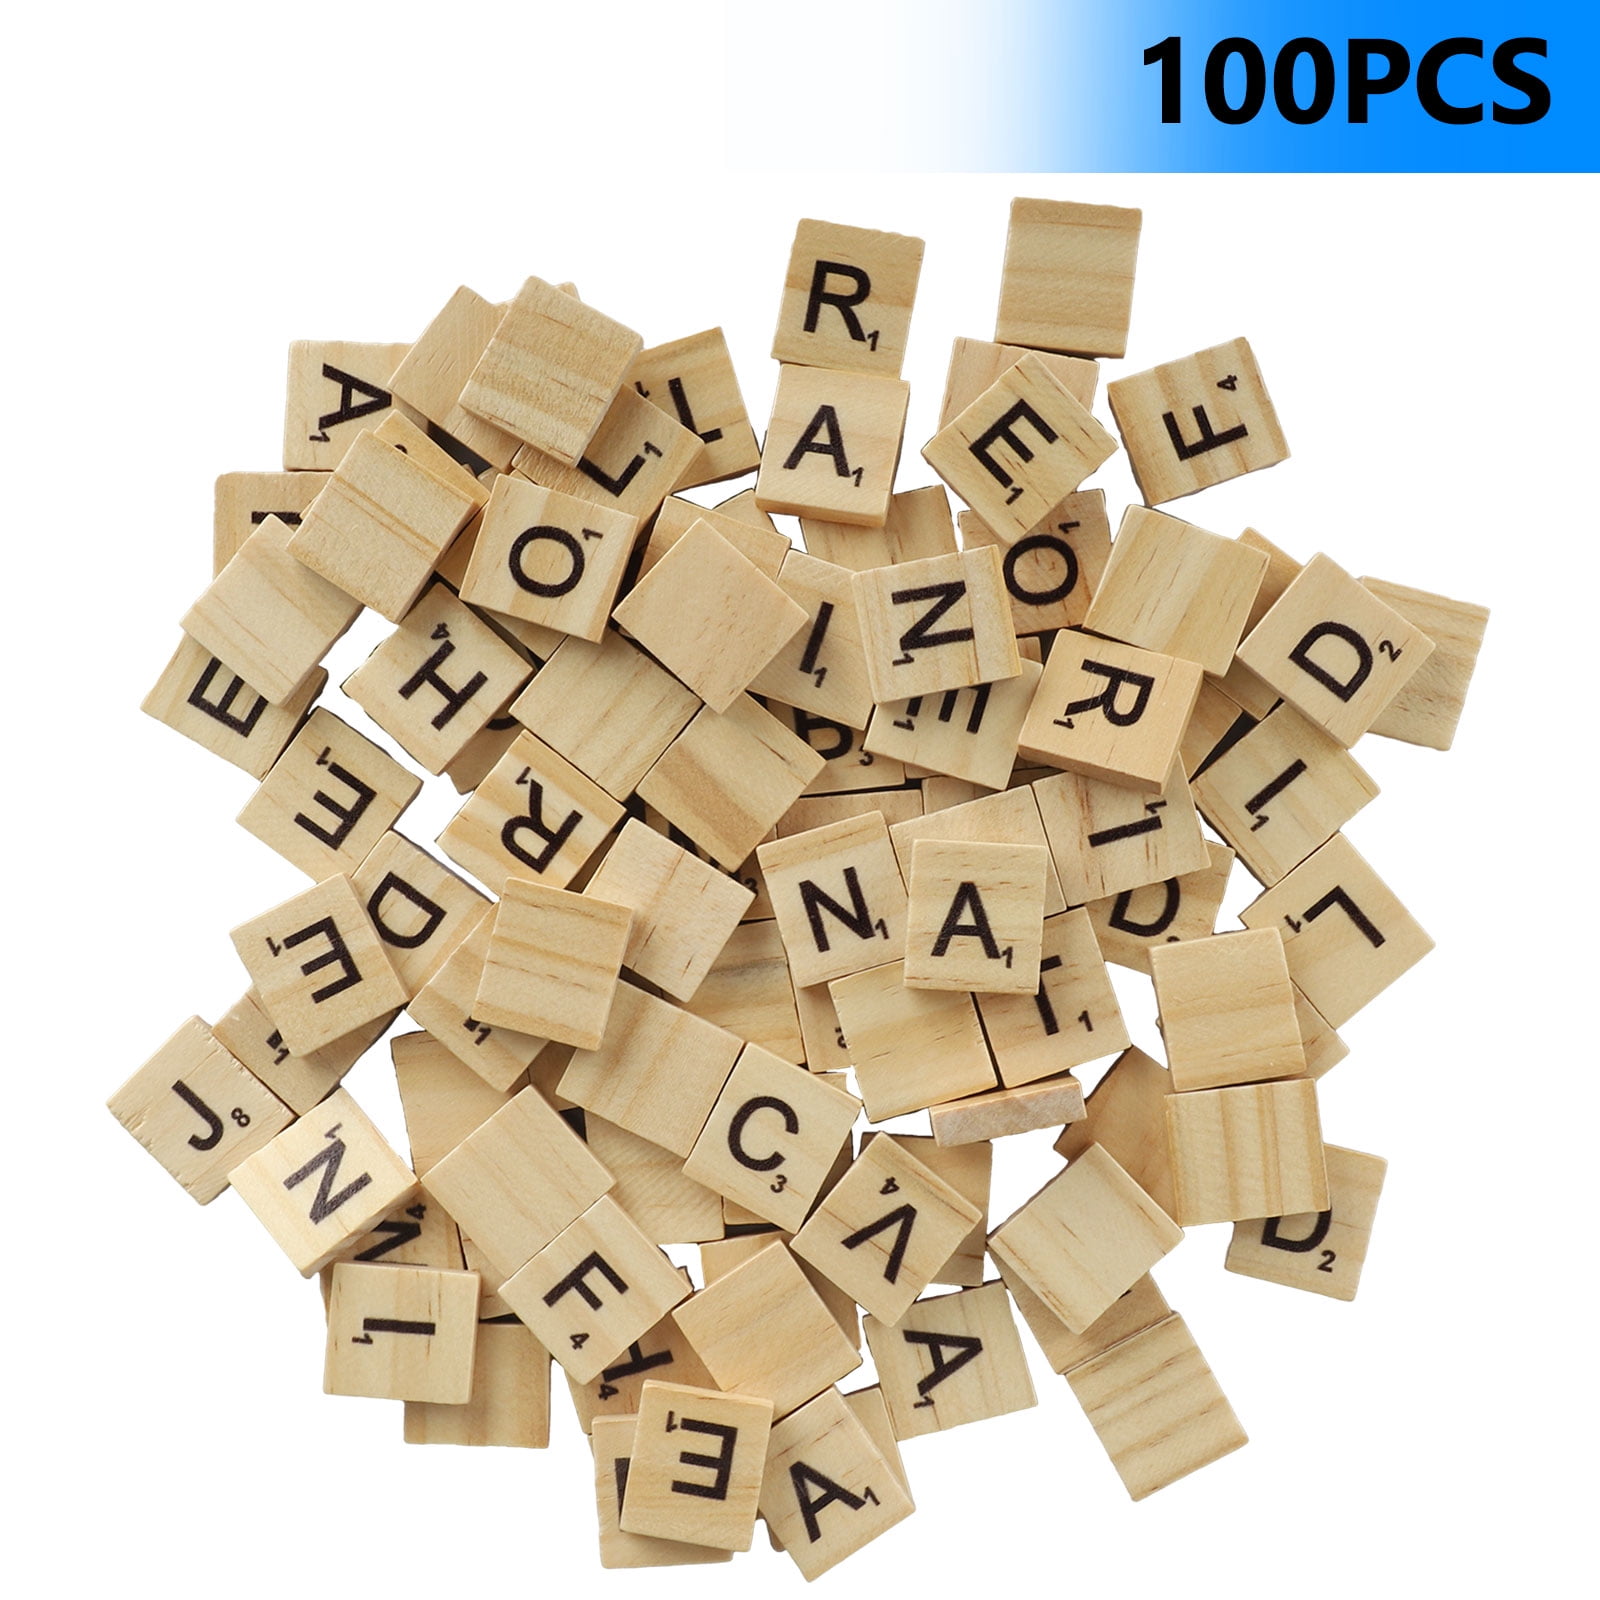 100 pc Arts & Crafts Complete Set of Scrabble Wood Letter Tiles Etc Labels 